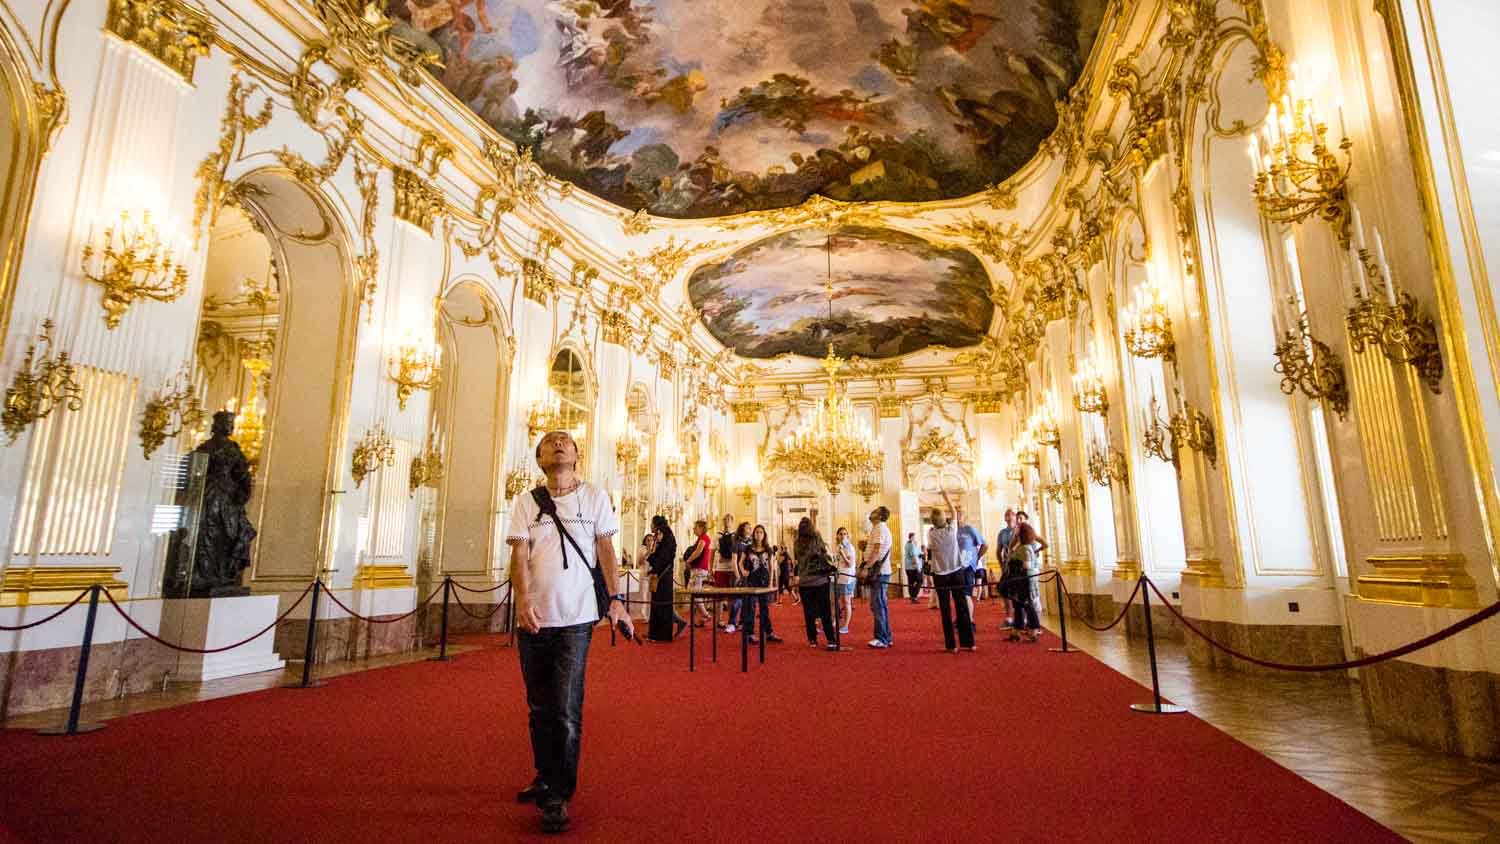 Amazing Architecture Inside The Schonbrunn Palace In Vienna, Austria